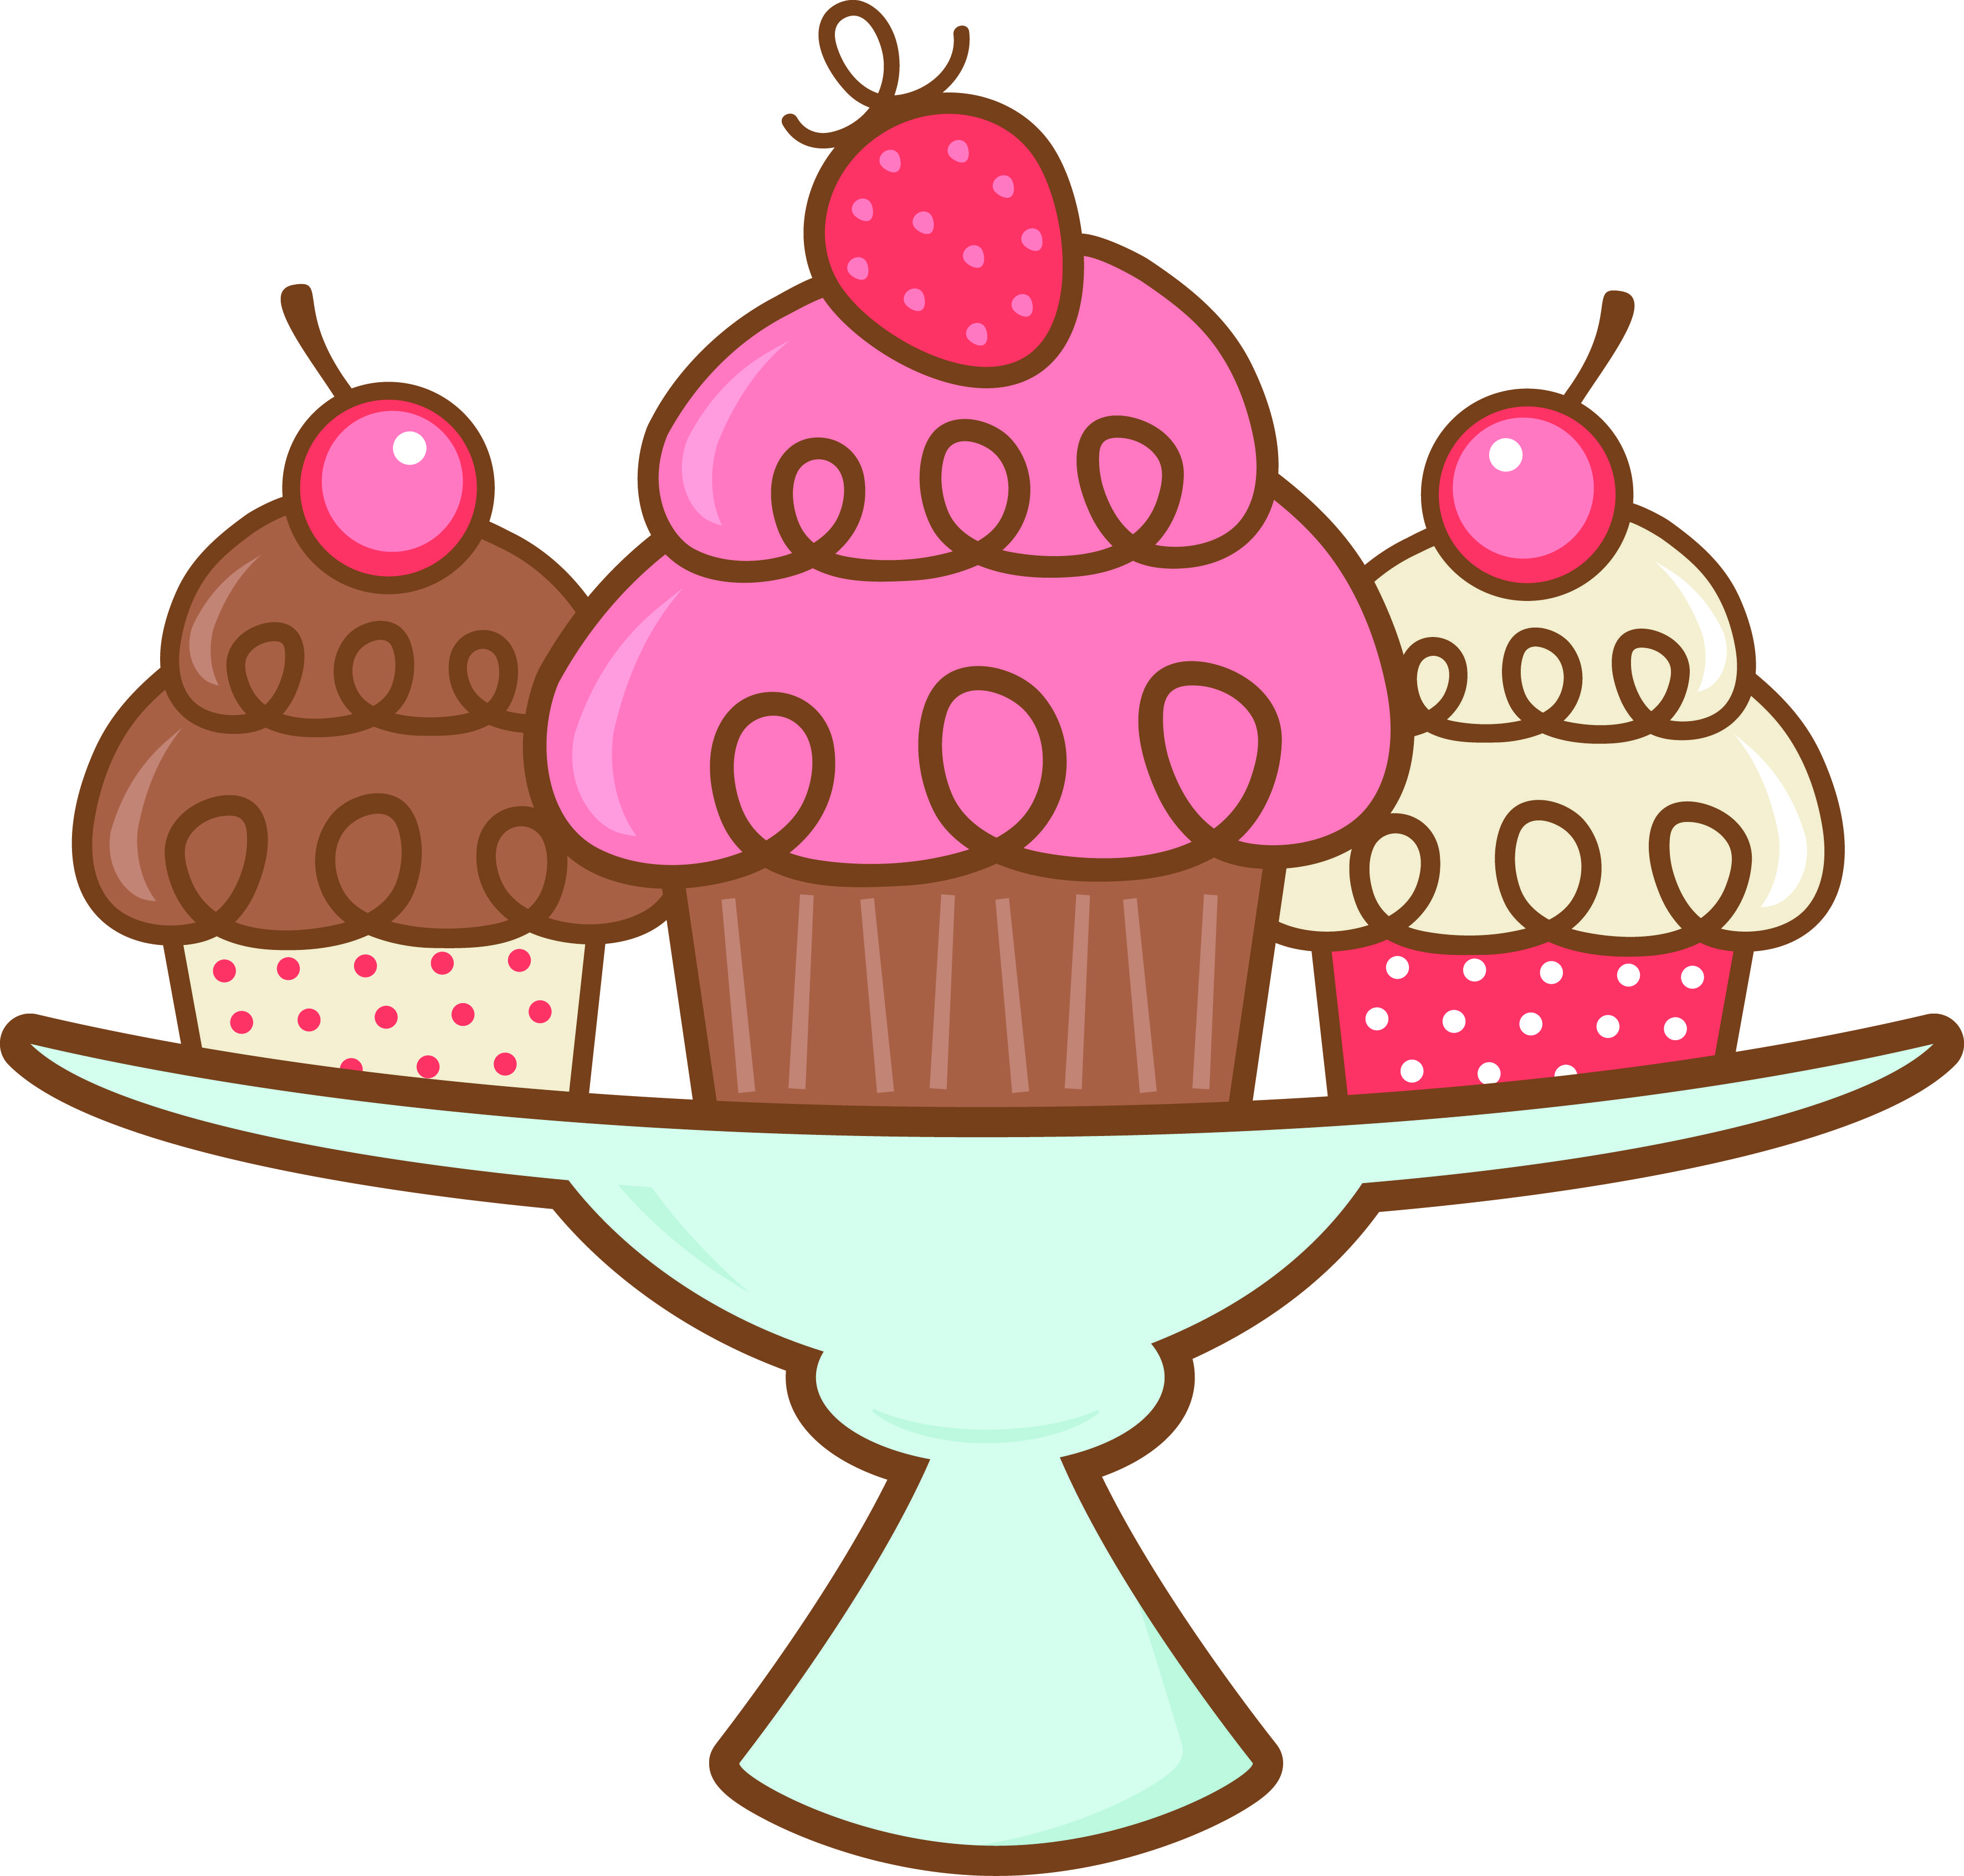 Cupcakes clipart tray cupcake. Pastelitos svg files illustration